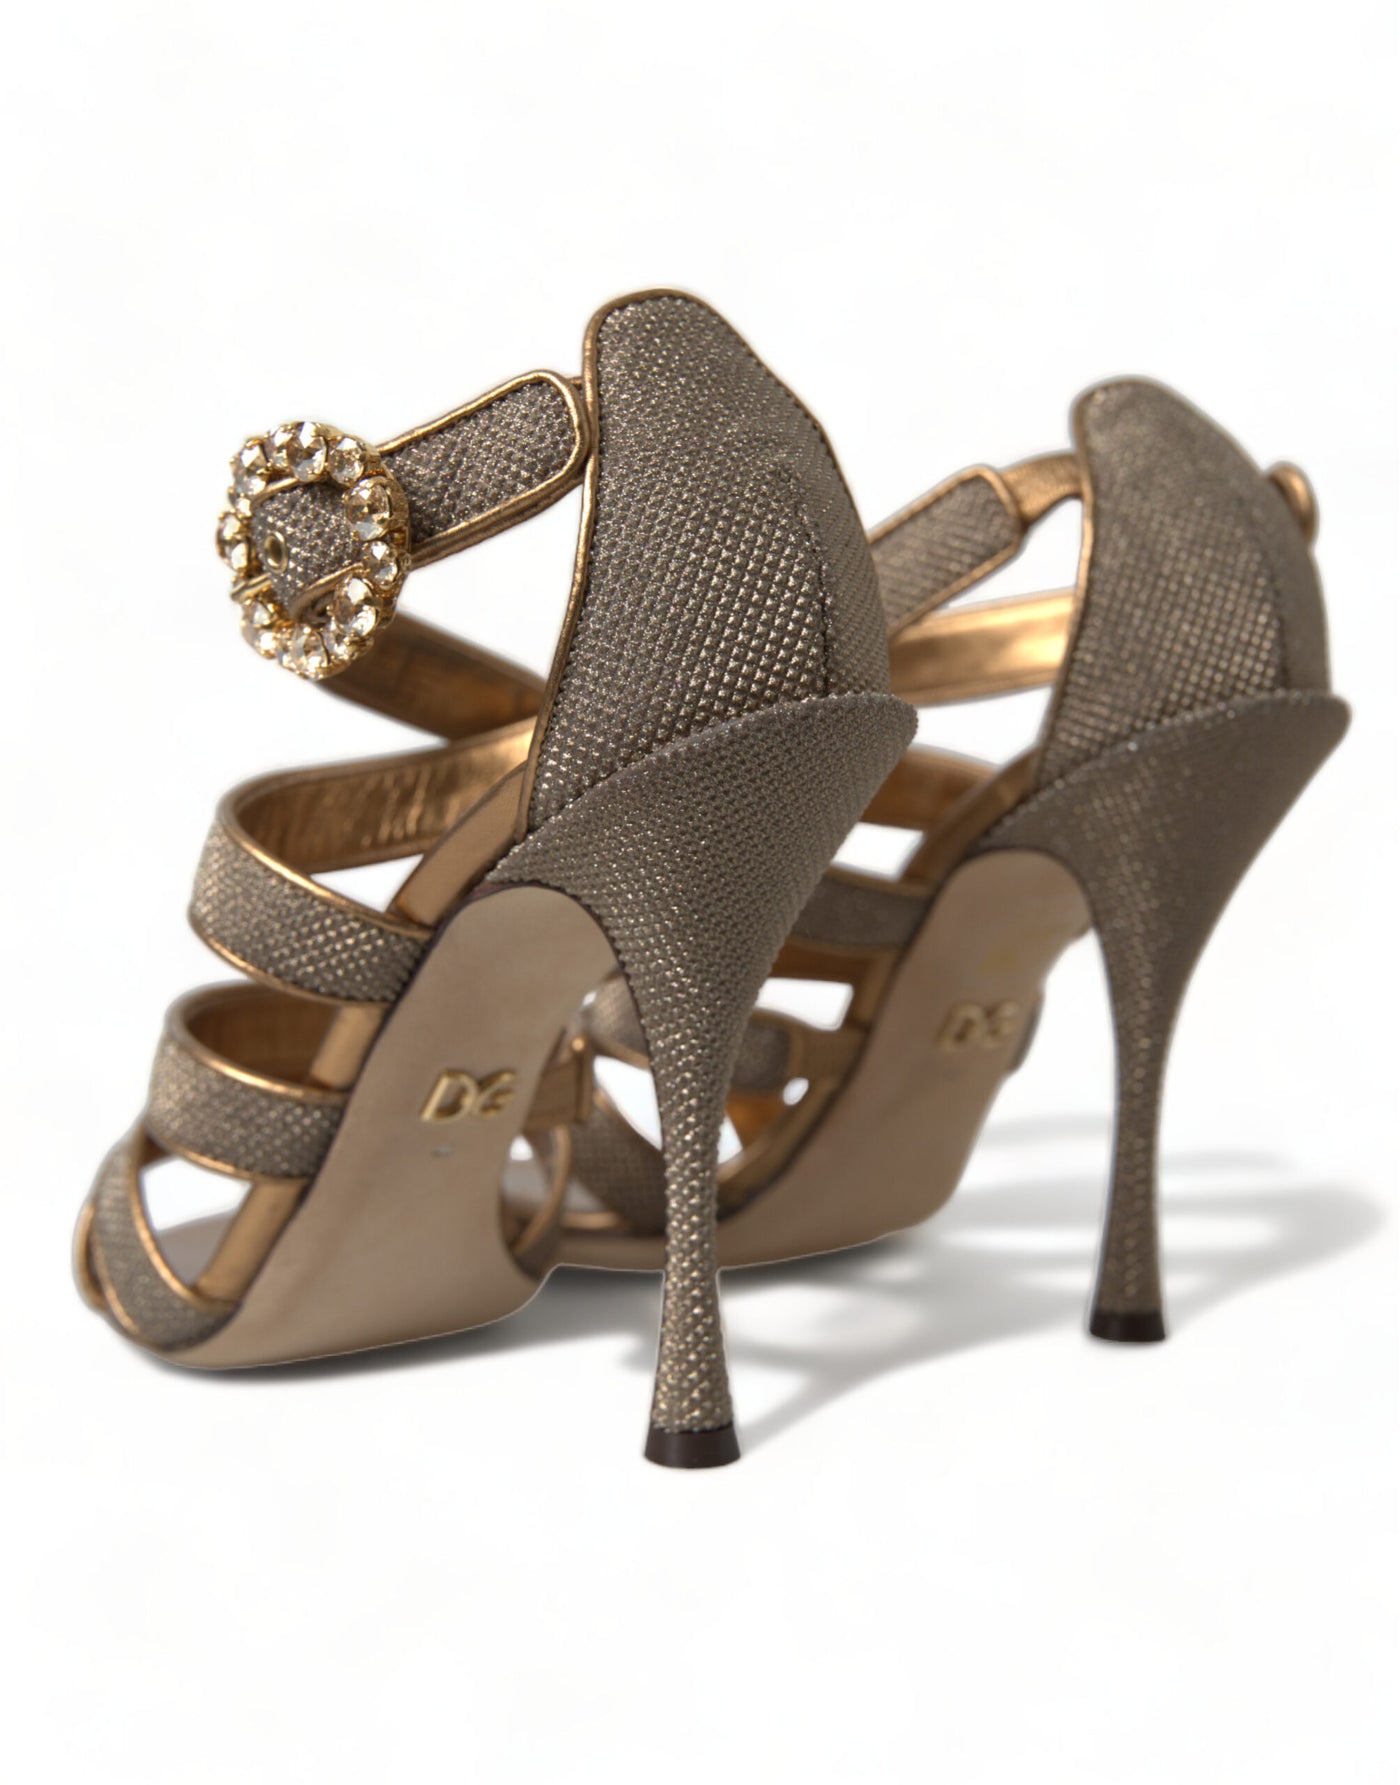 Bronze Crystal Strap Heels Sandals Shoes